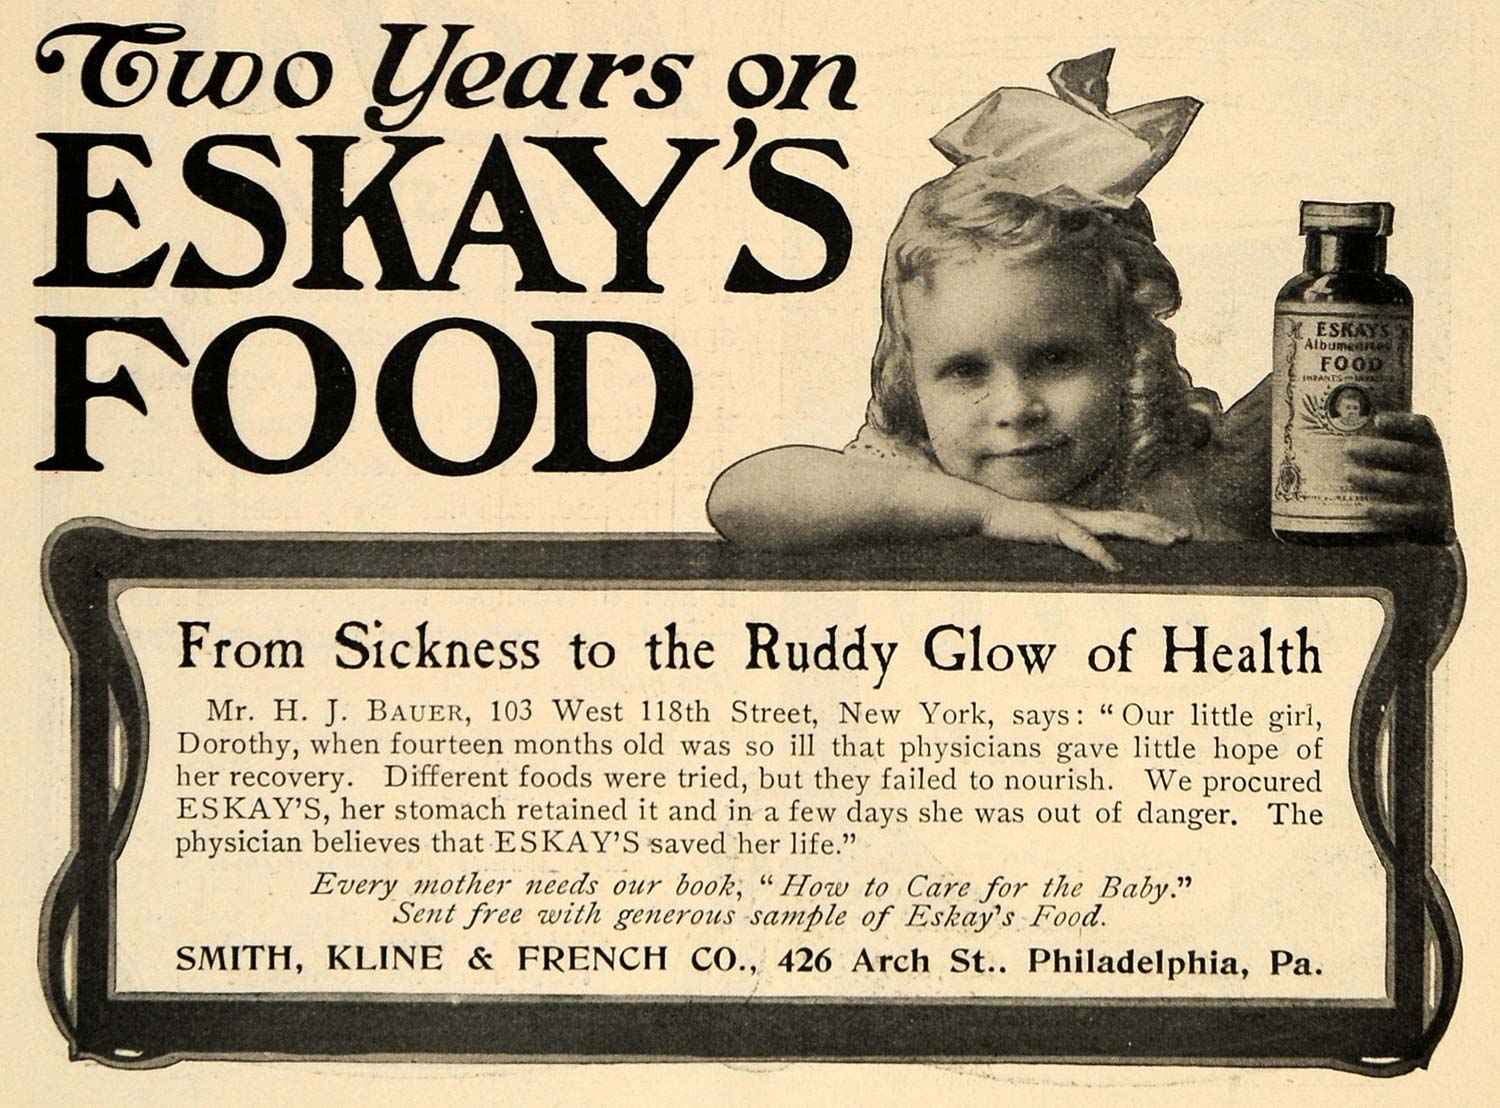 1904 Ad Smith Kline & French Co. Eskay's Food Child - ORIGINAL ADVERTISING TOM2